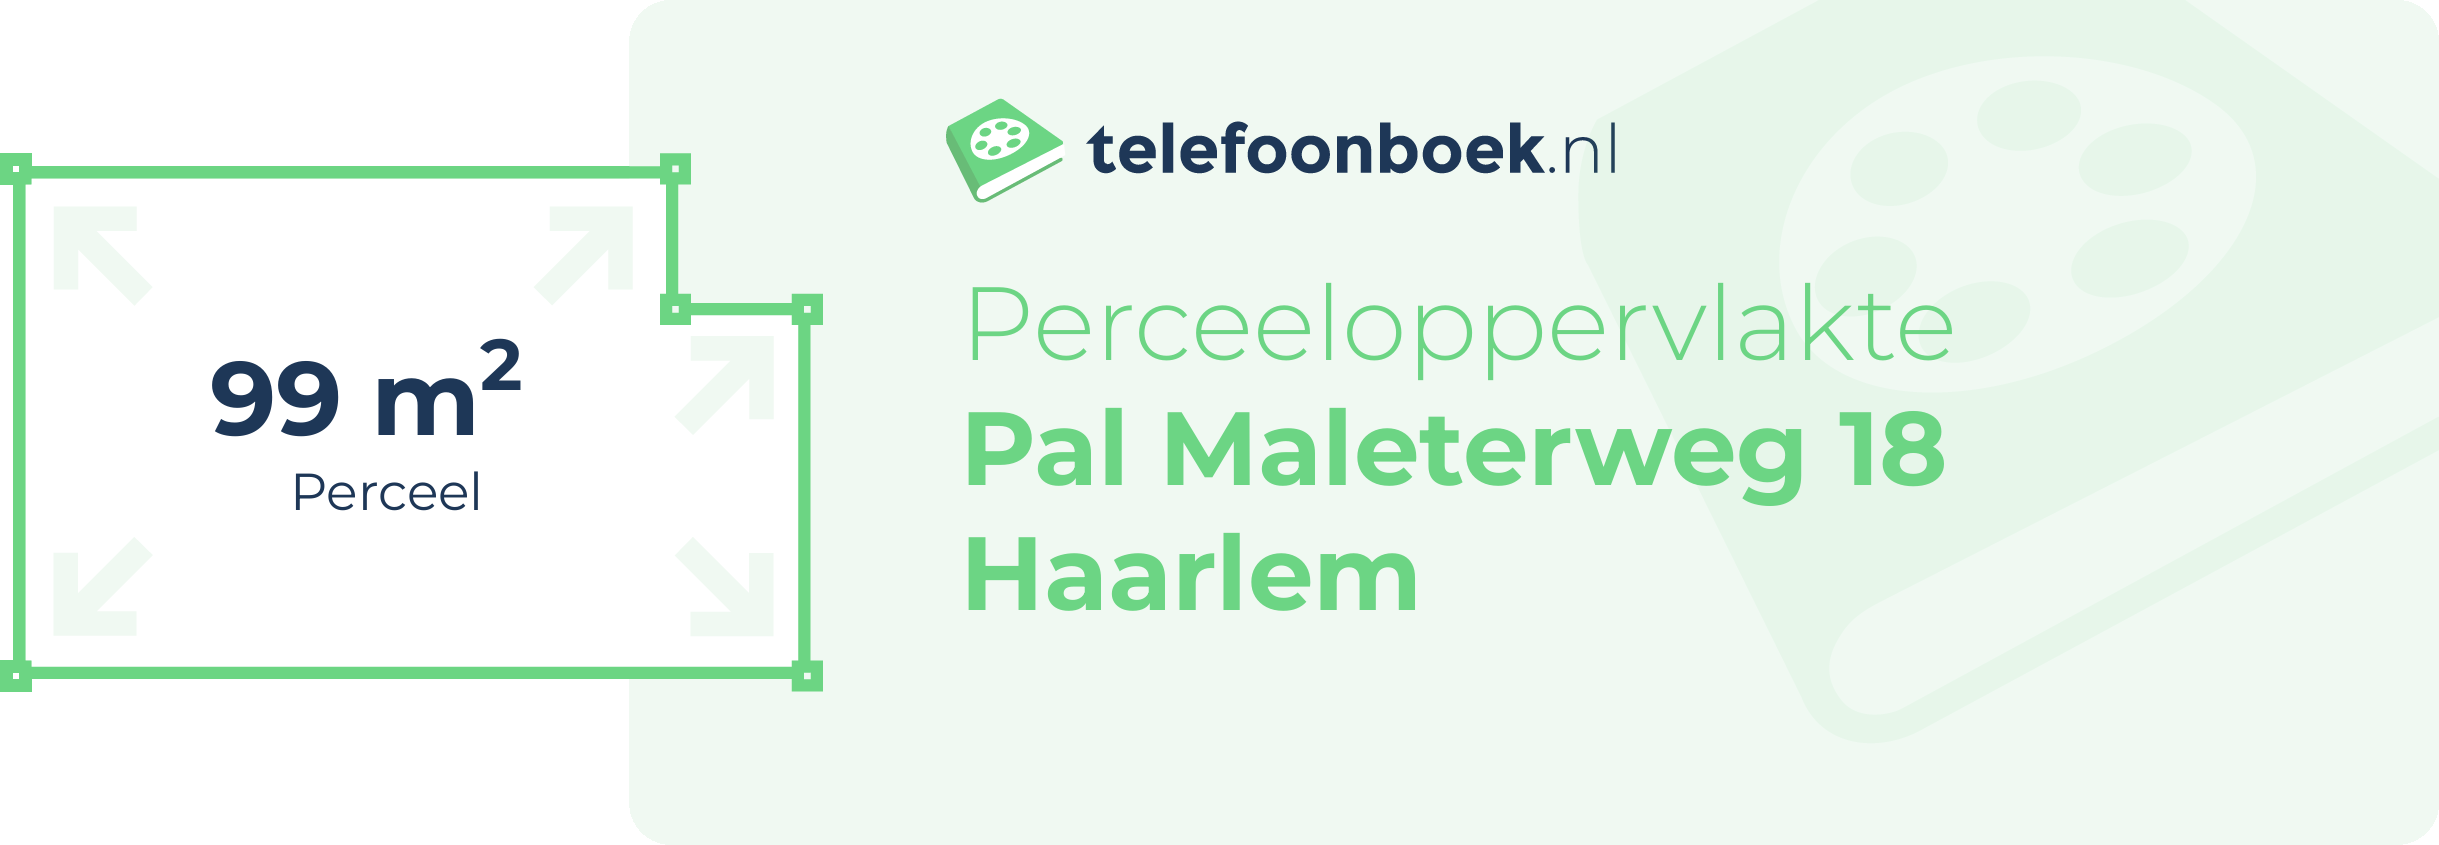 Perceeloppervlakte Pal Maleterweg 18 Haarlem